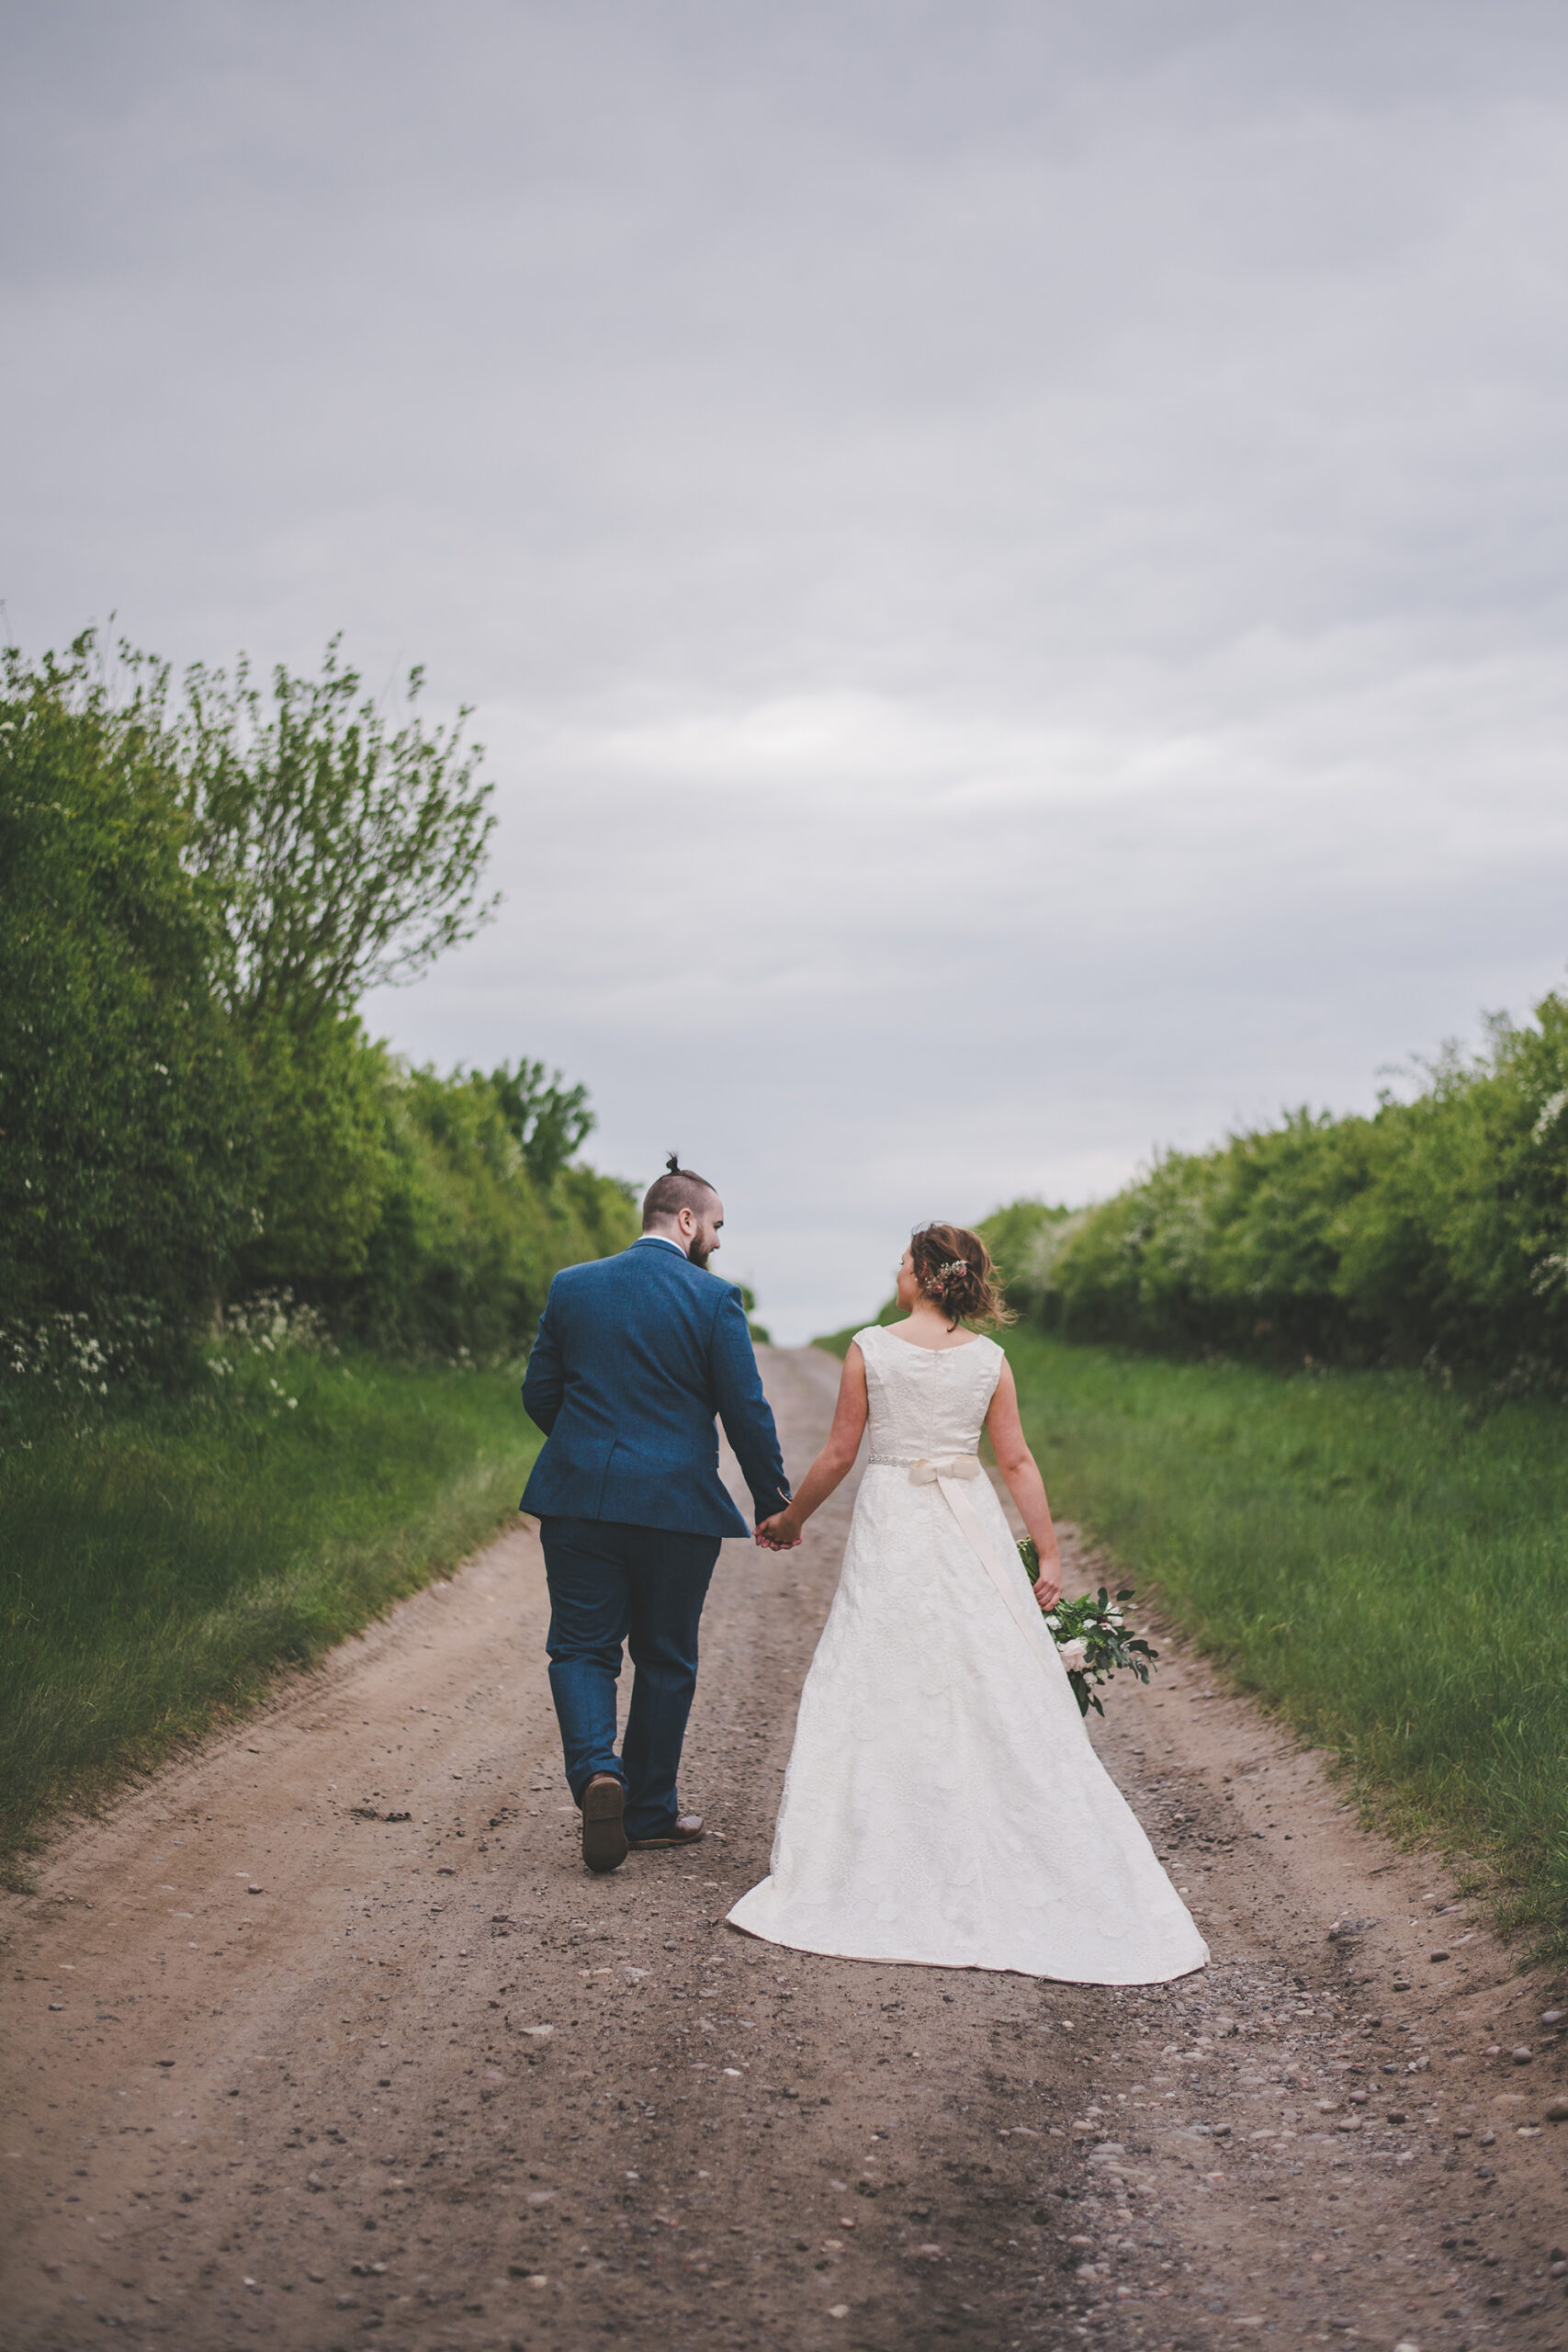 Laura_Andrew_Rustic-Homemade-Wedding_Rhi-Scotchbrook-Photography_SBS_020